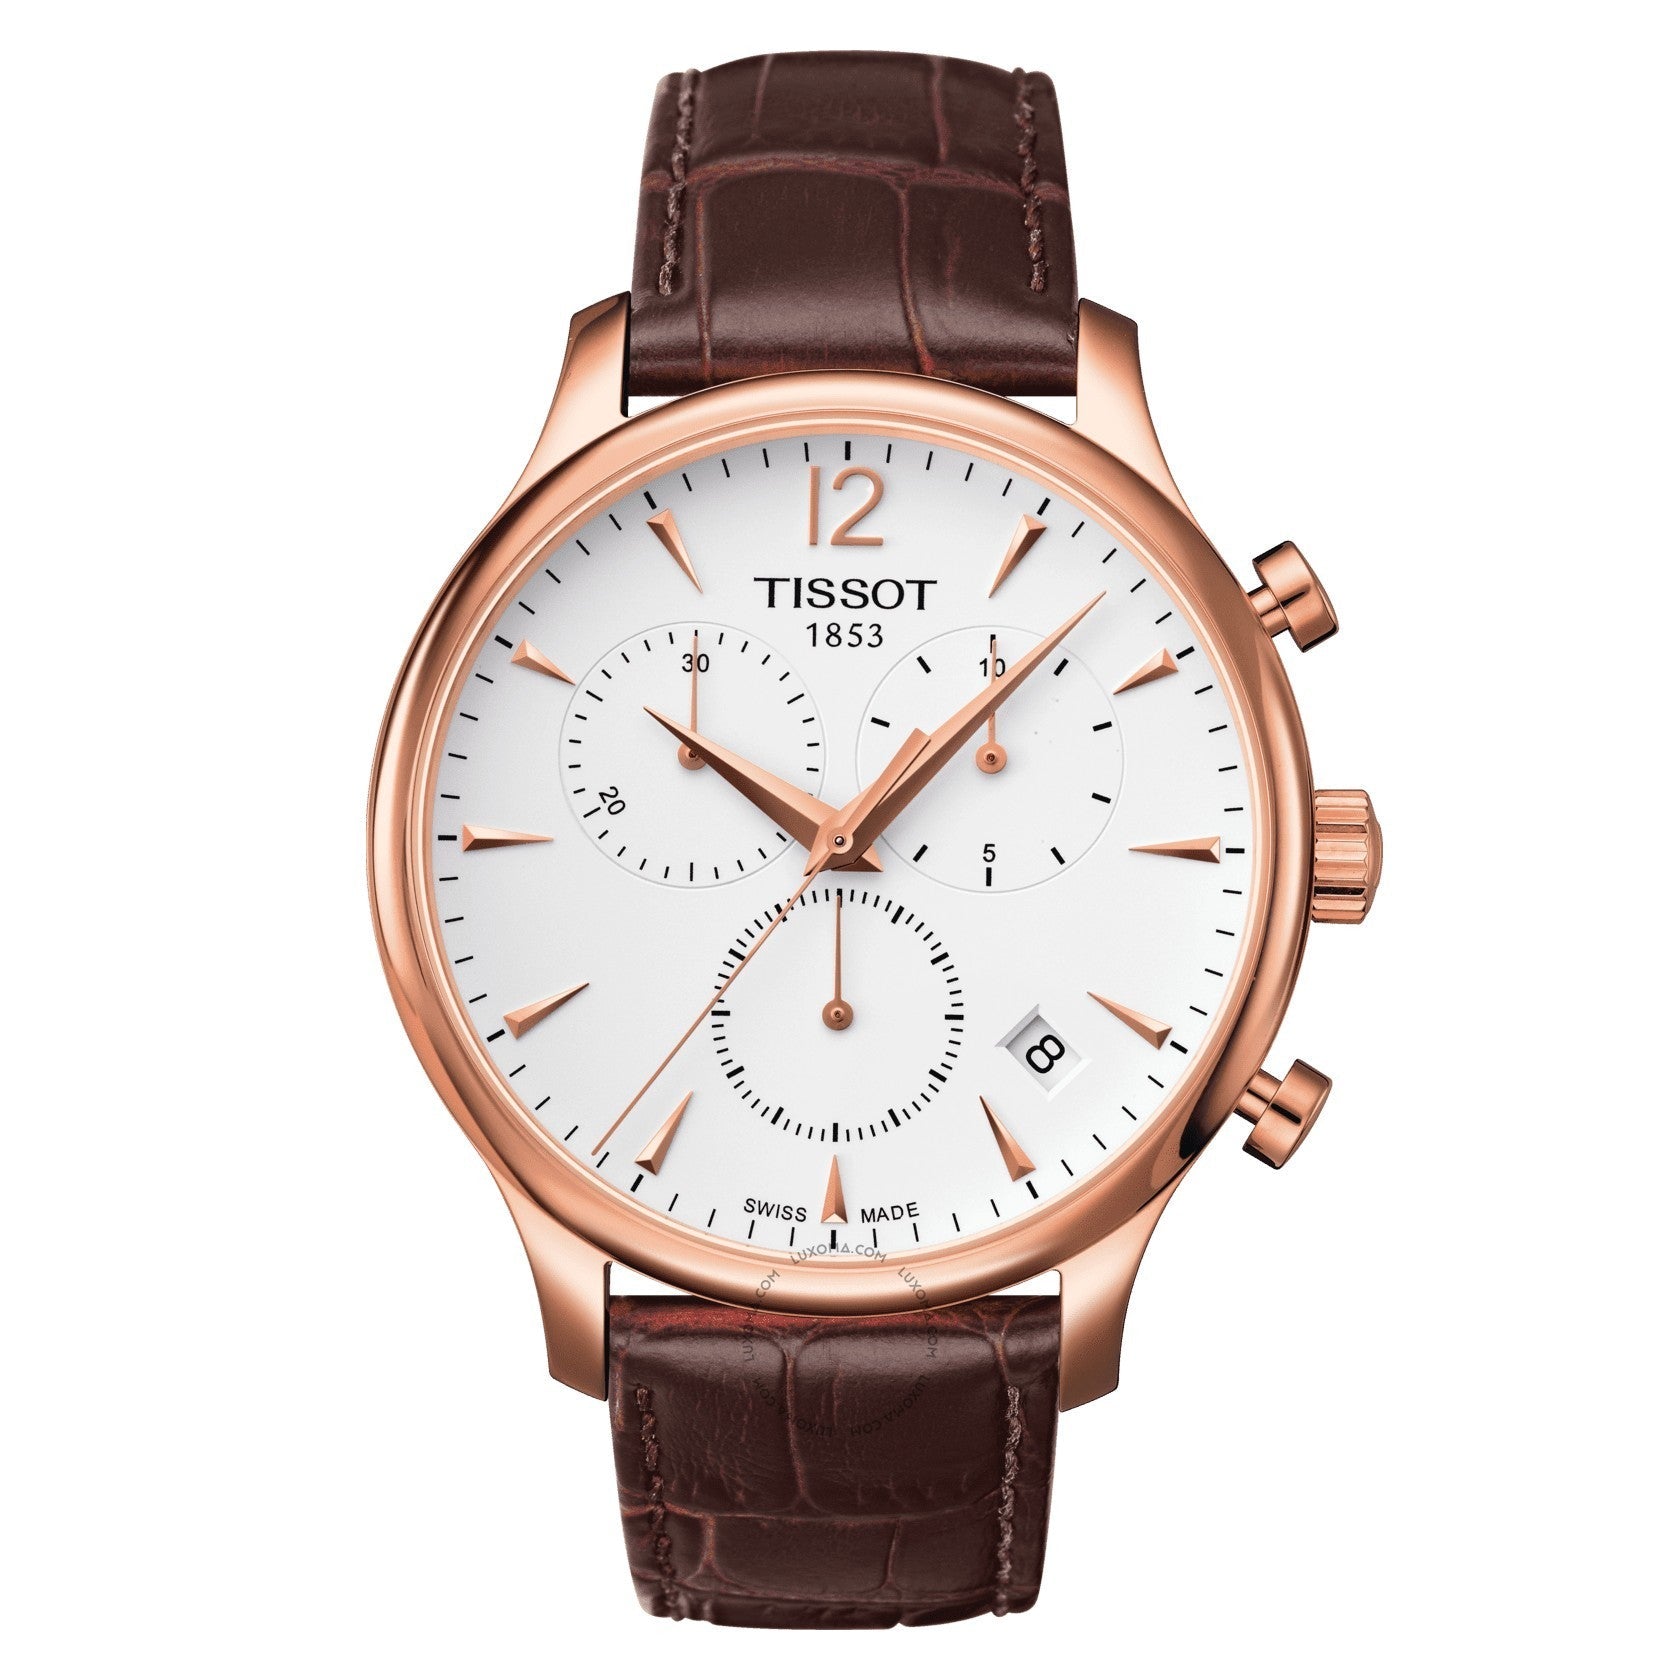 Tissot Tradition Chronograph White Dial Men's Watch T063.617.36.037.00